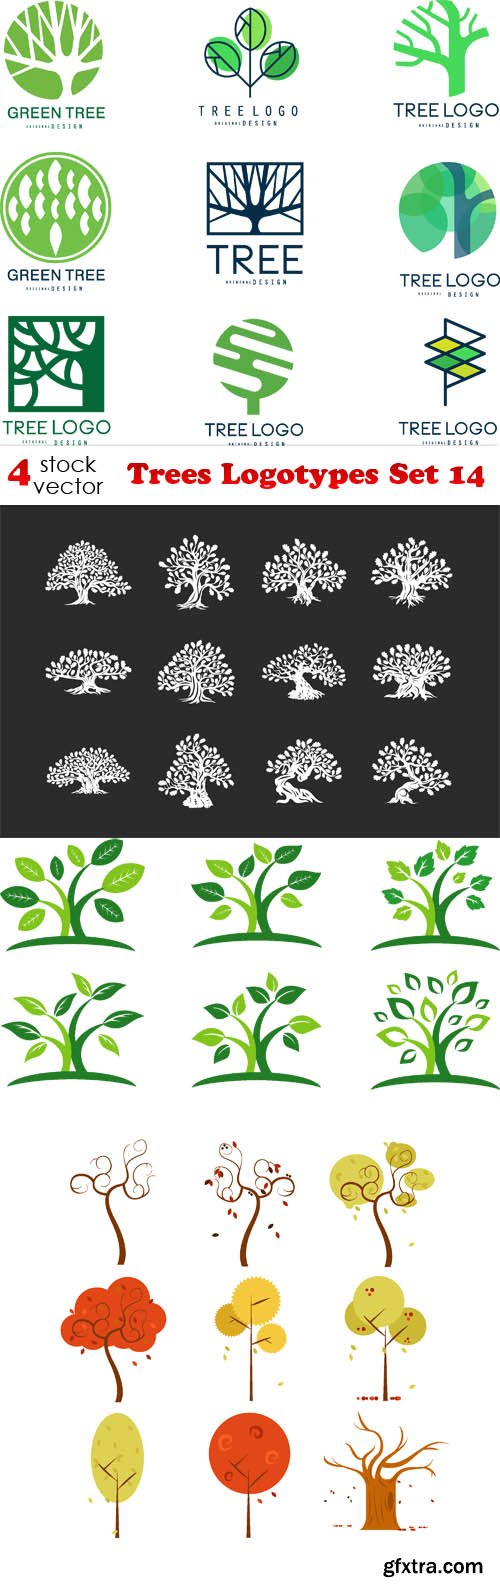 Vectors - Trees Logotypes Set 14